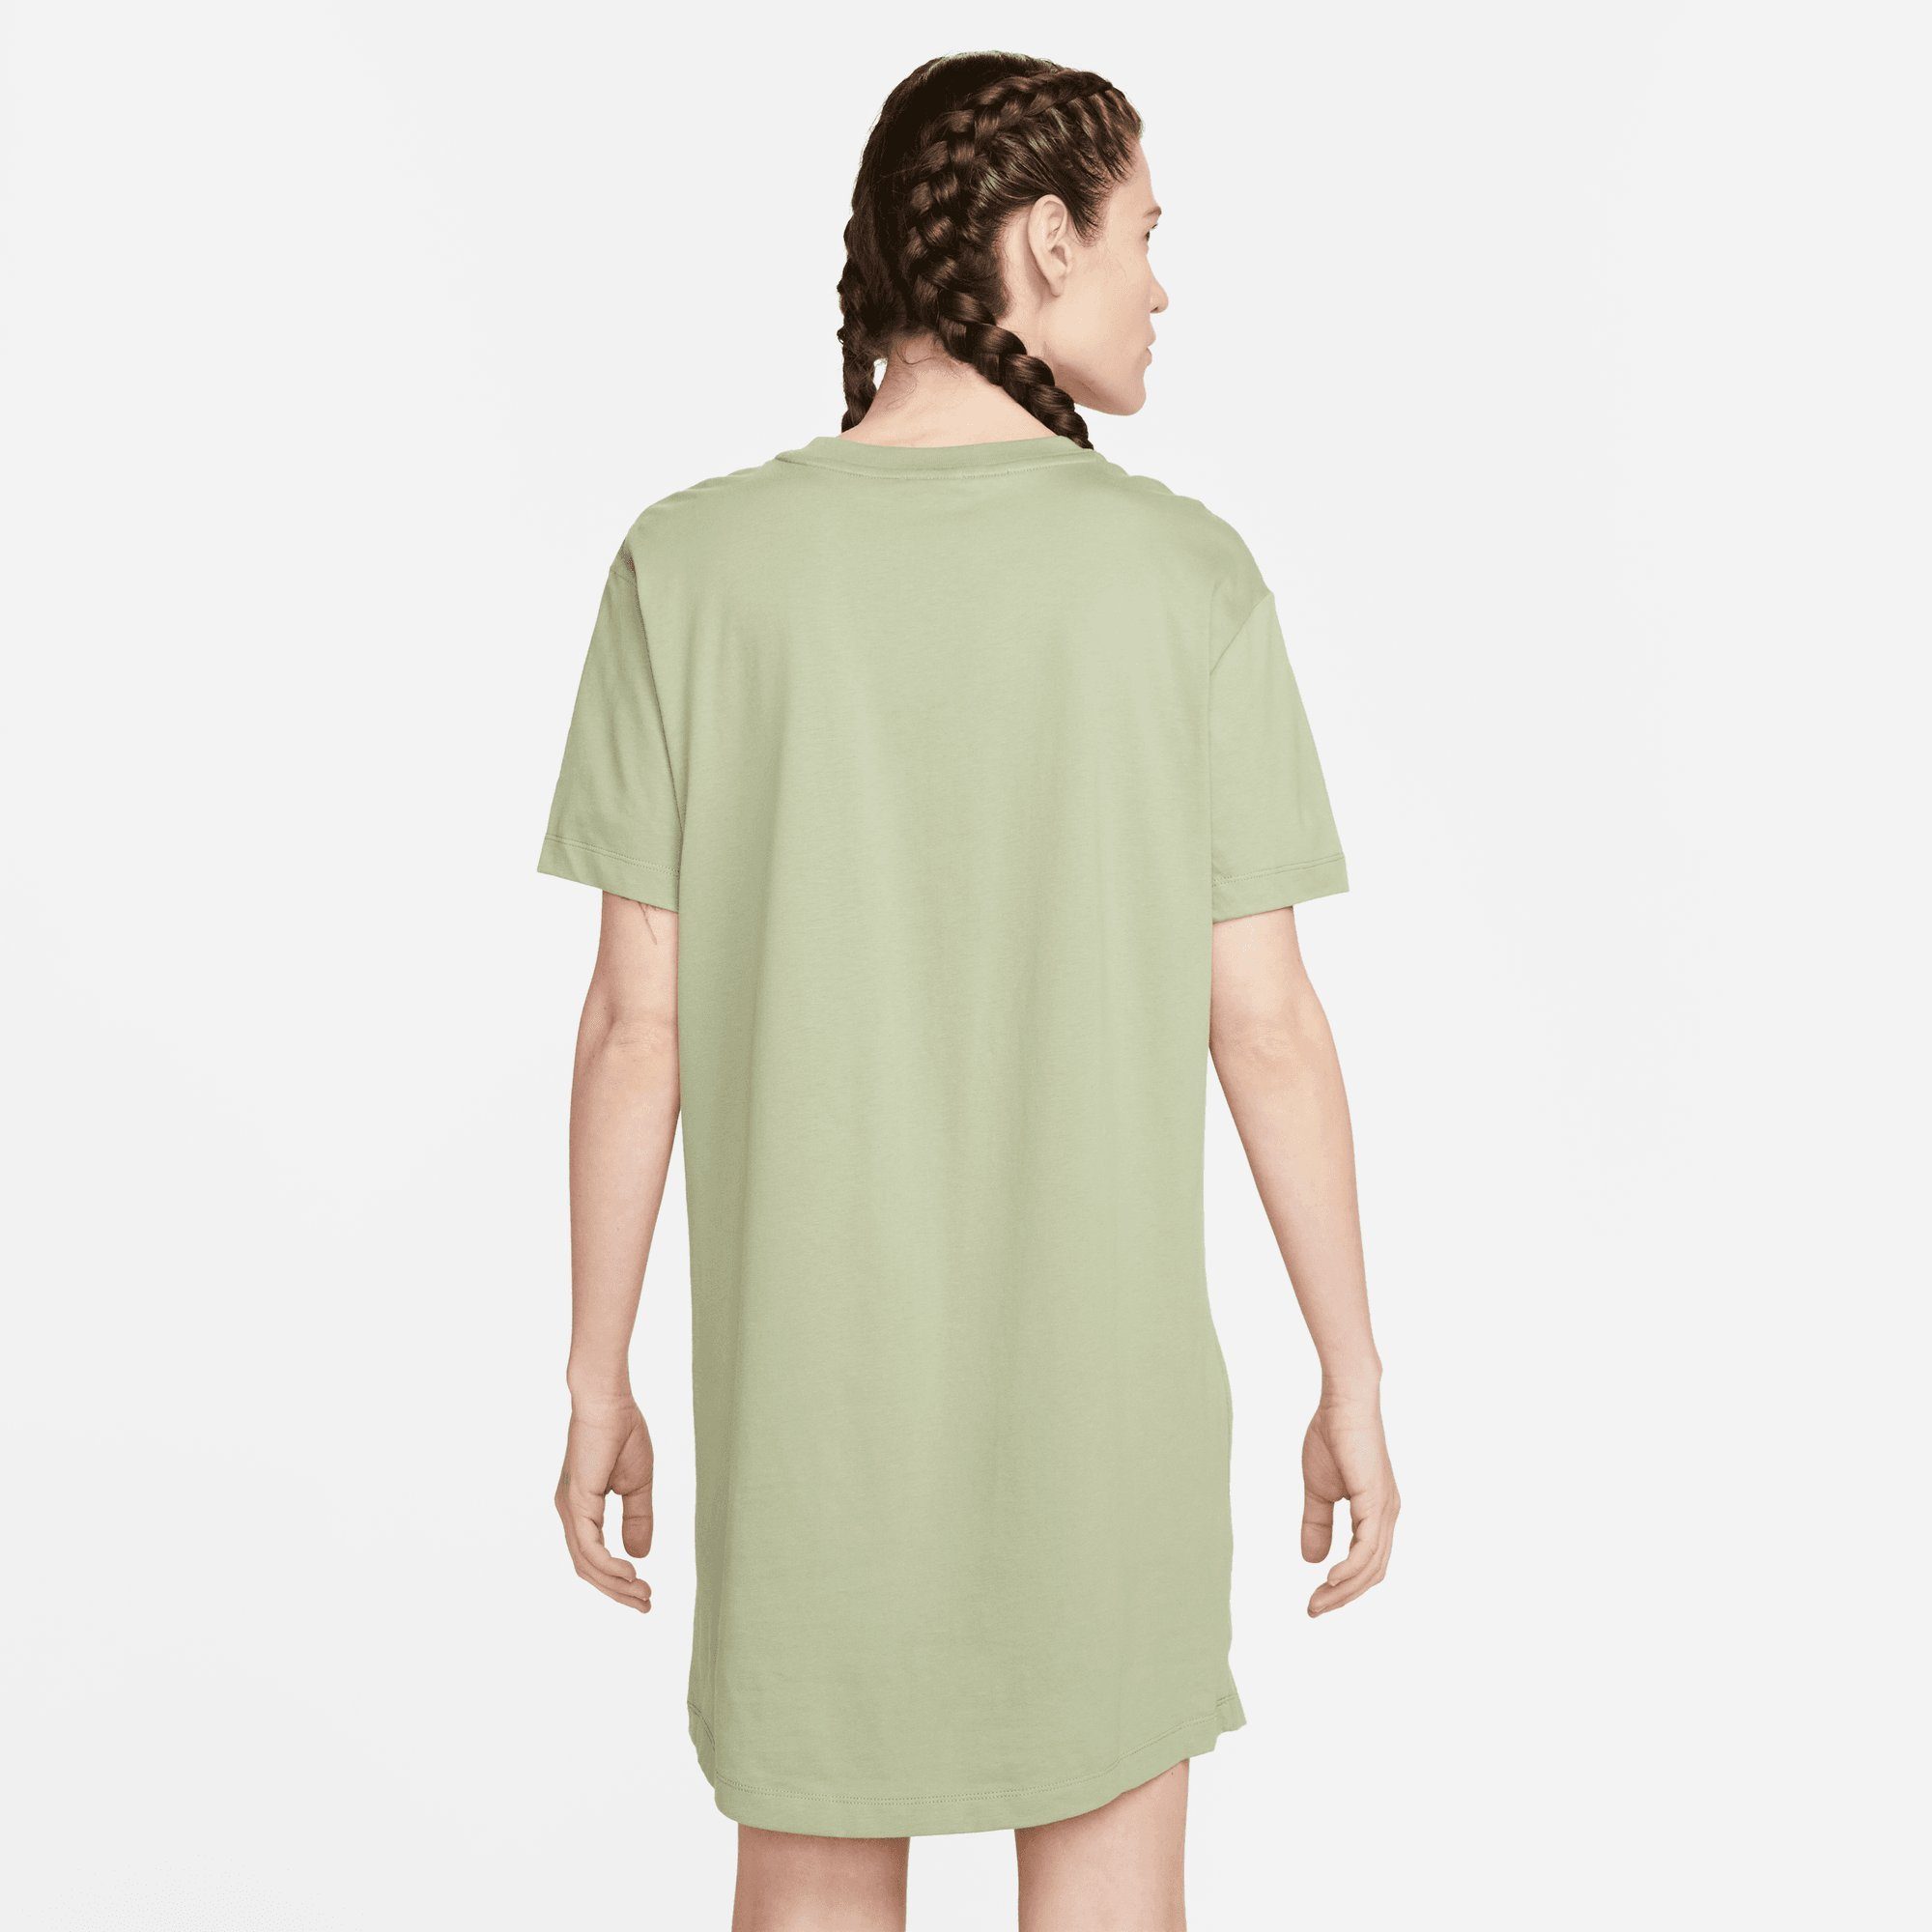 OIL WOMEN'S GREEN/BLACK Nike Sportswear SHORT-SLEEVE Sommerkleid DRESS ESSENTIAL